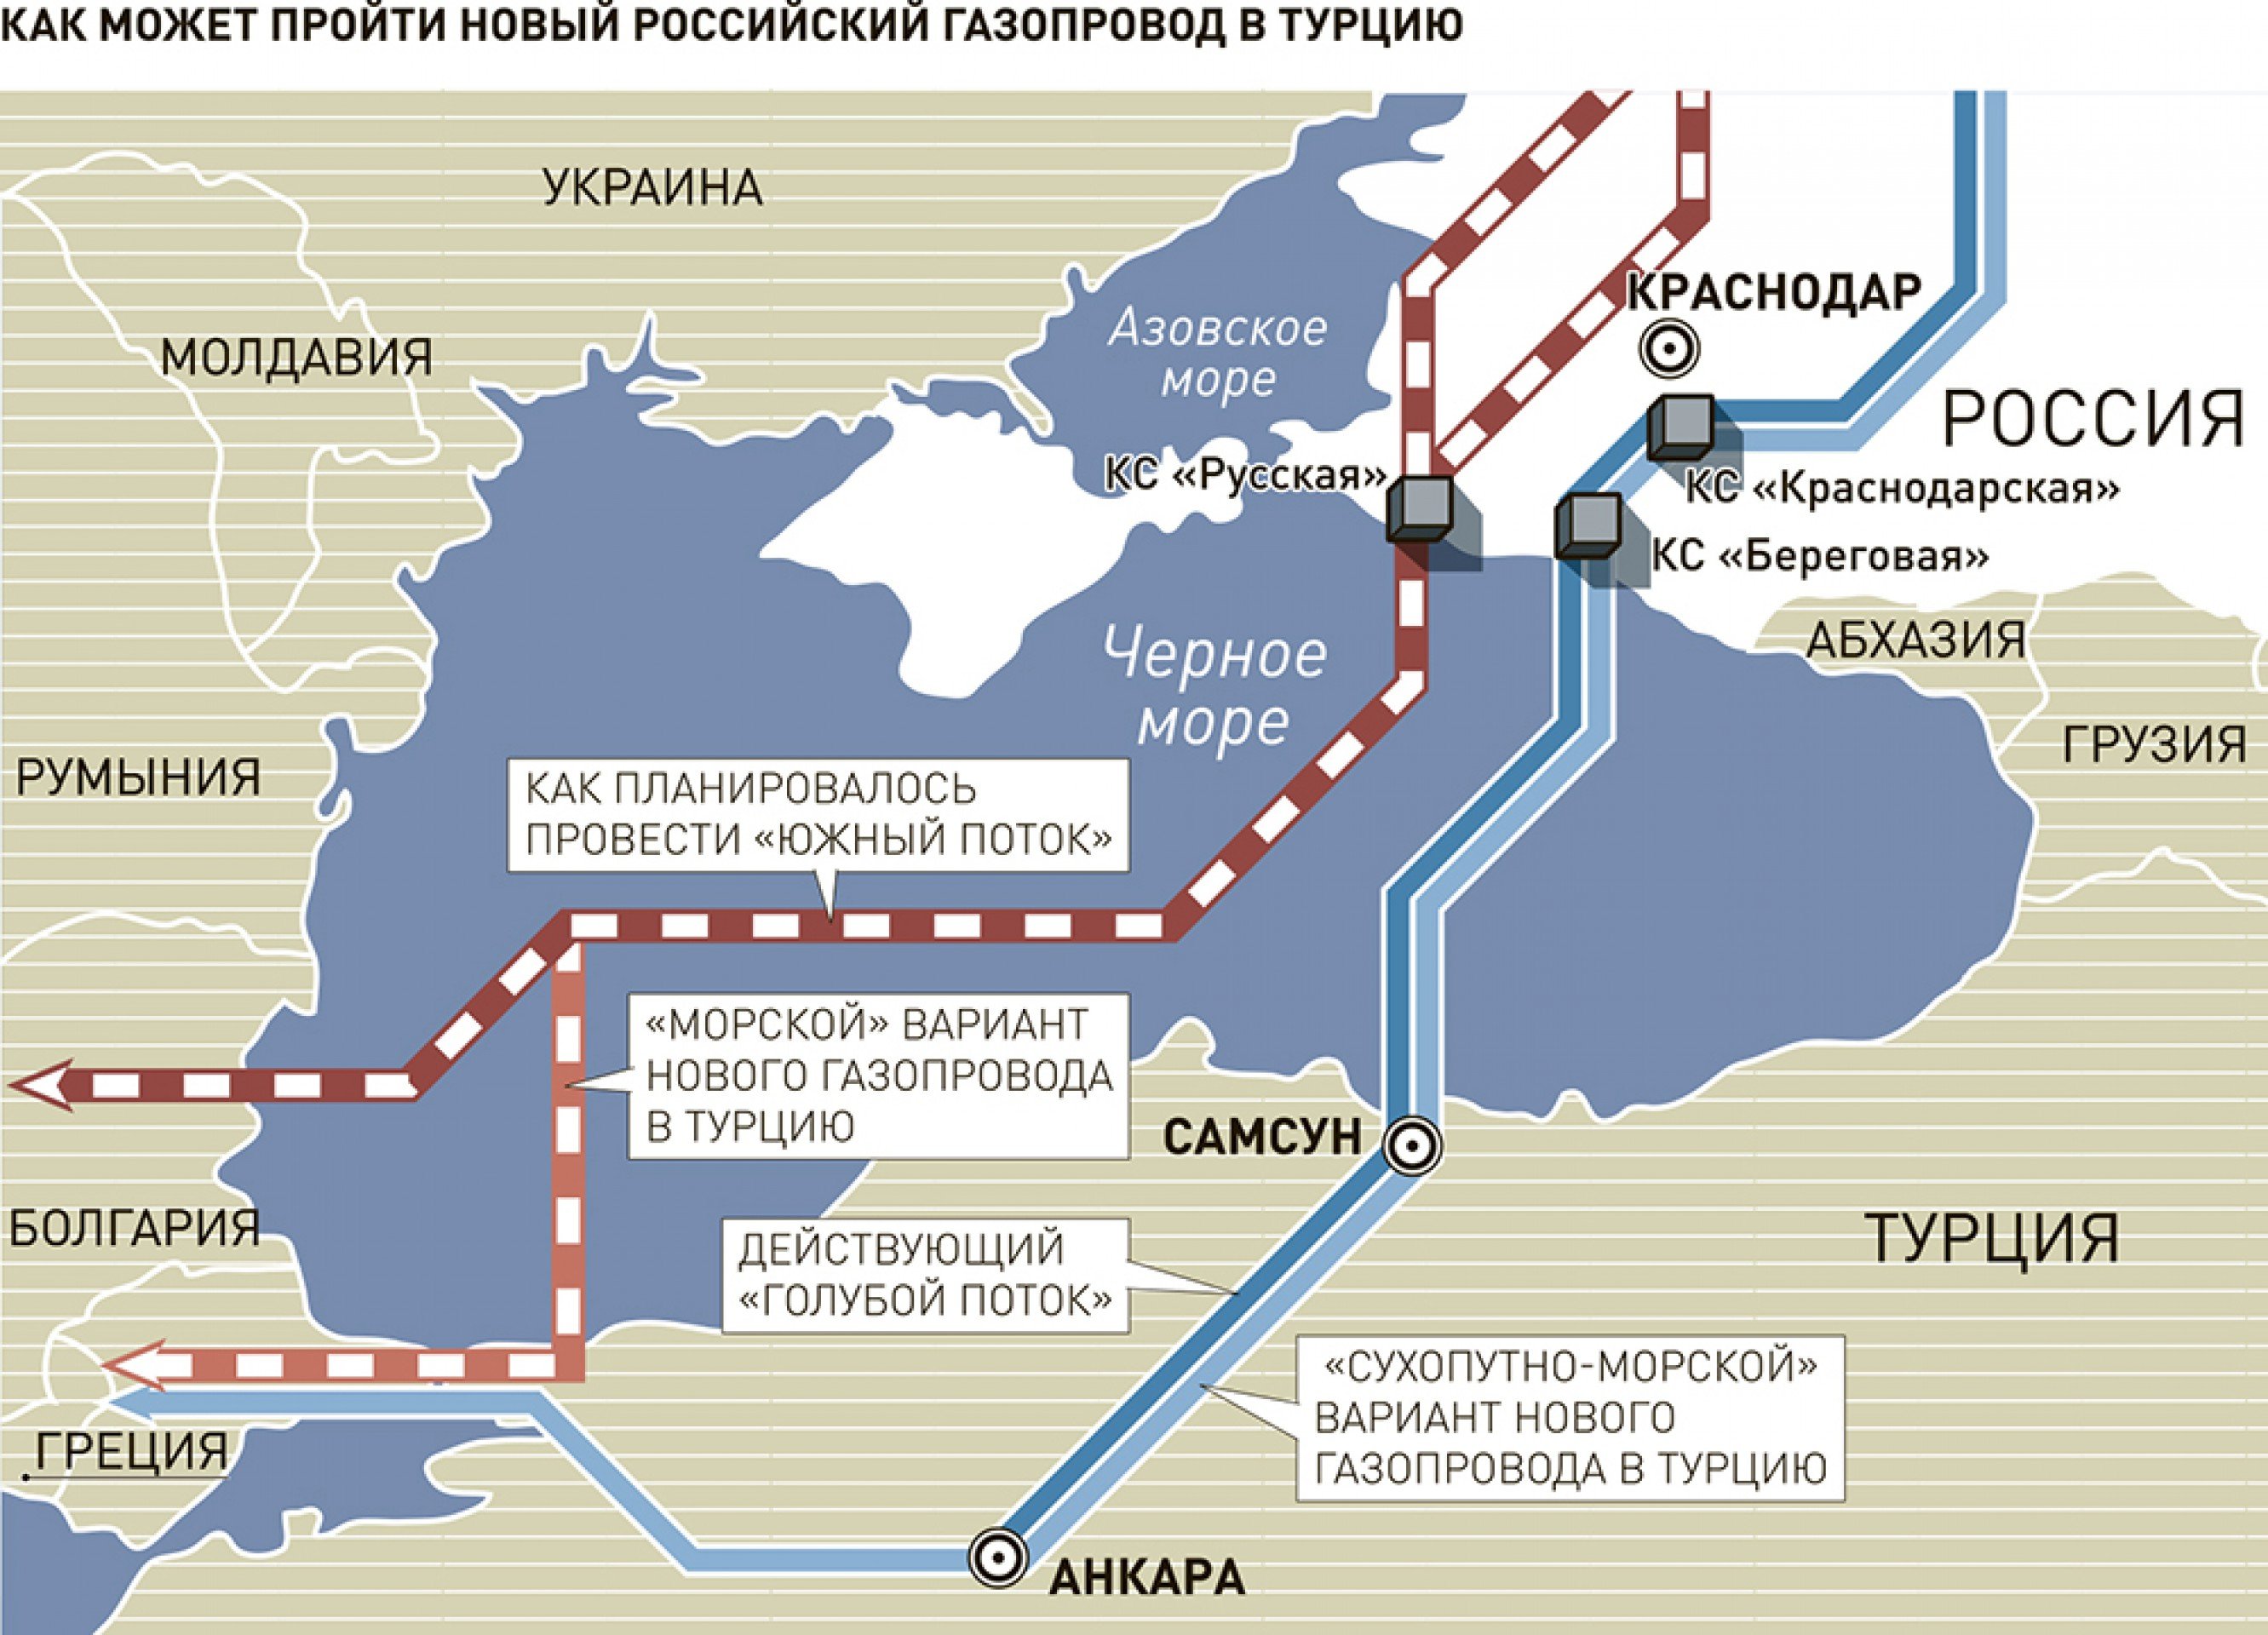 Газопровод диалог. Южный поток газопровод на карте через Турцию. Газопровод турецкий поток на карте Европы. Схема трубопровода турецкий поток. Схема турецкого потока газопровода на карте.